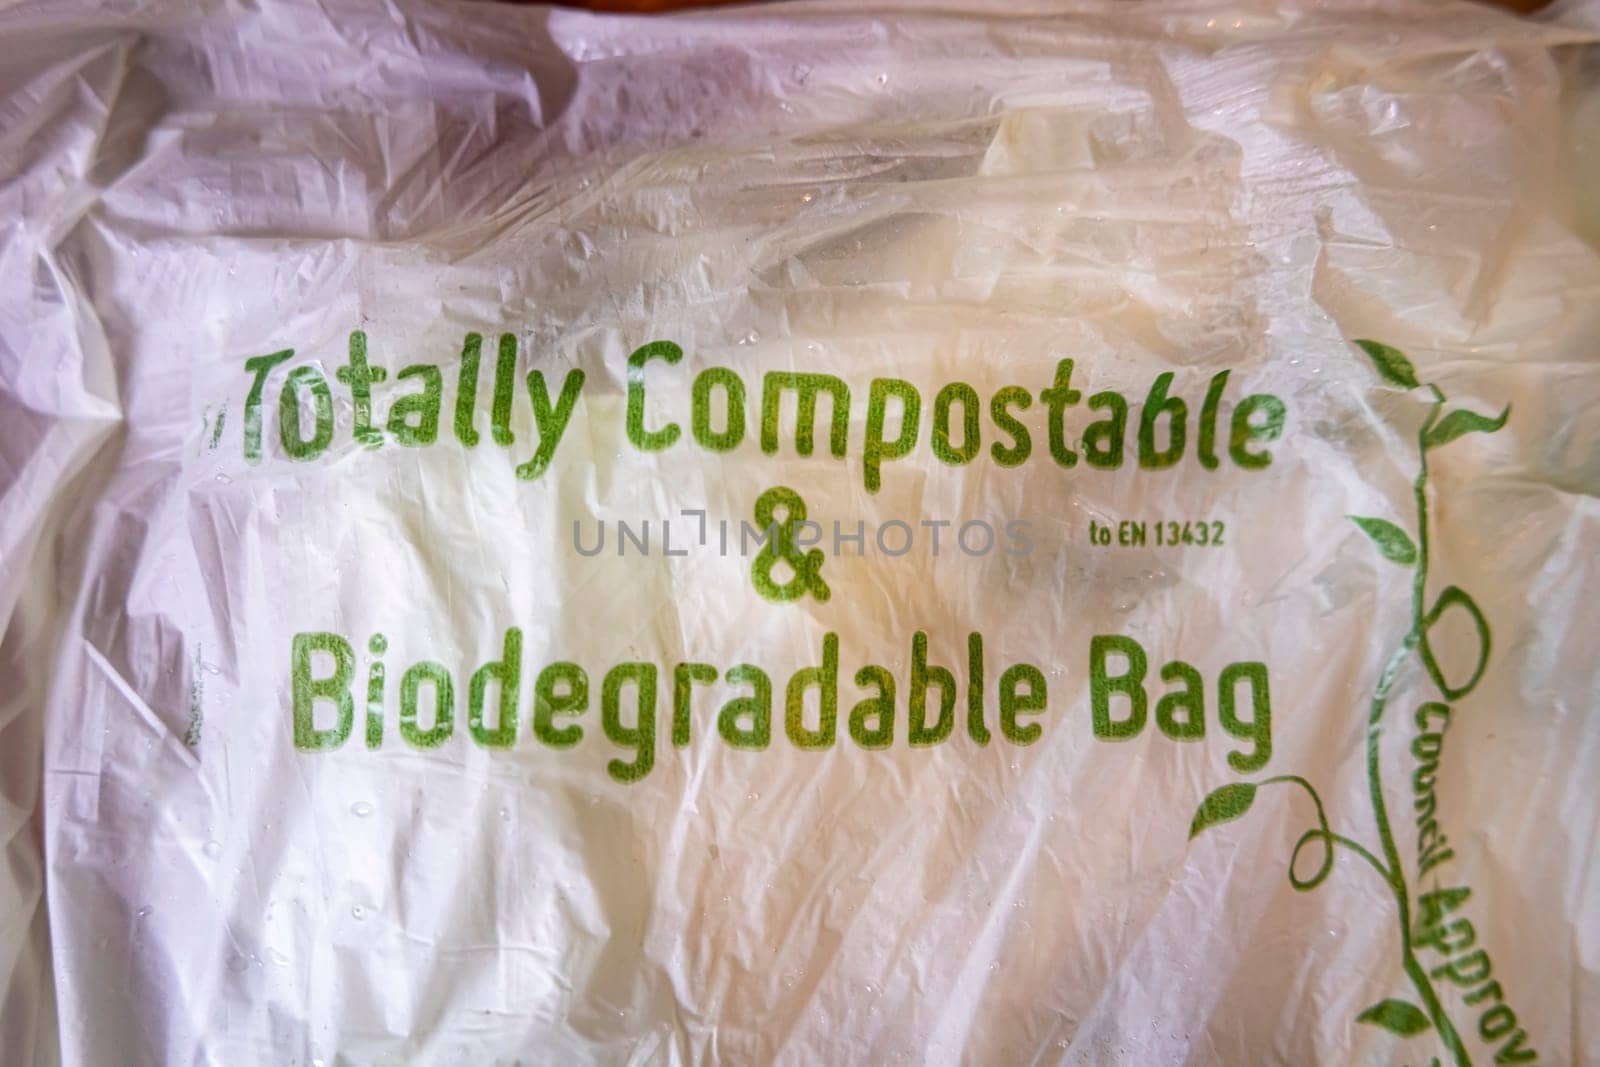 PORTNOO, IRELAND - NOVEMBER 11 2021: This bags are totally compostable.